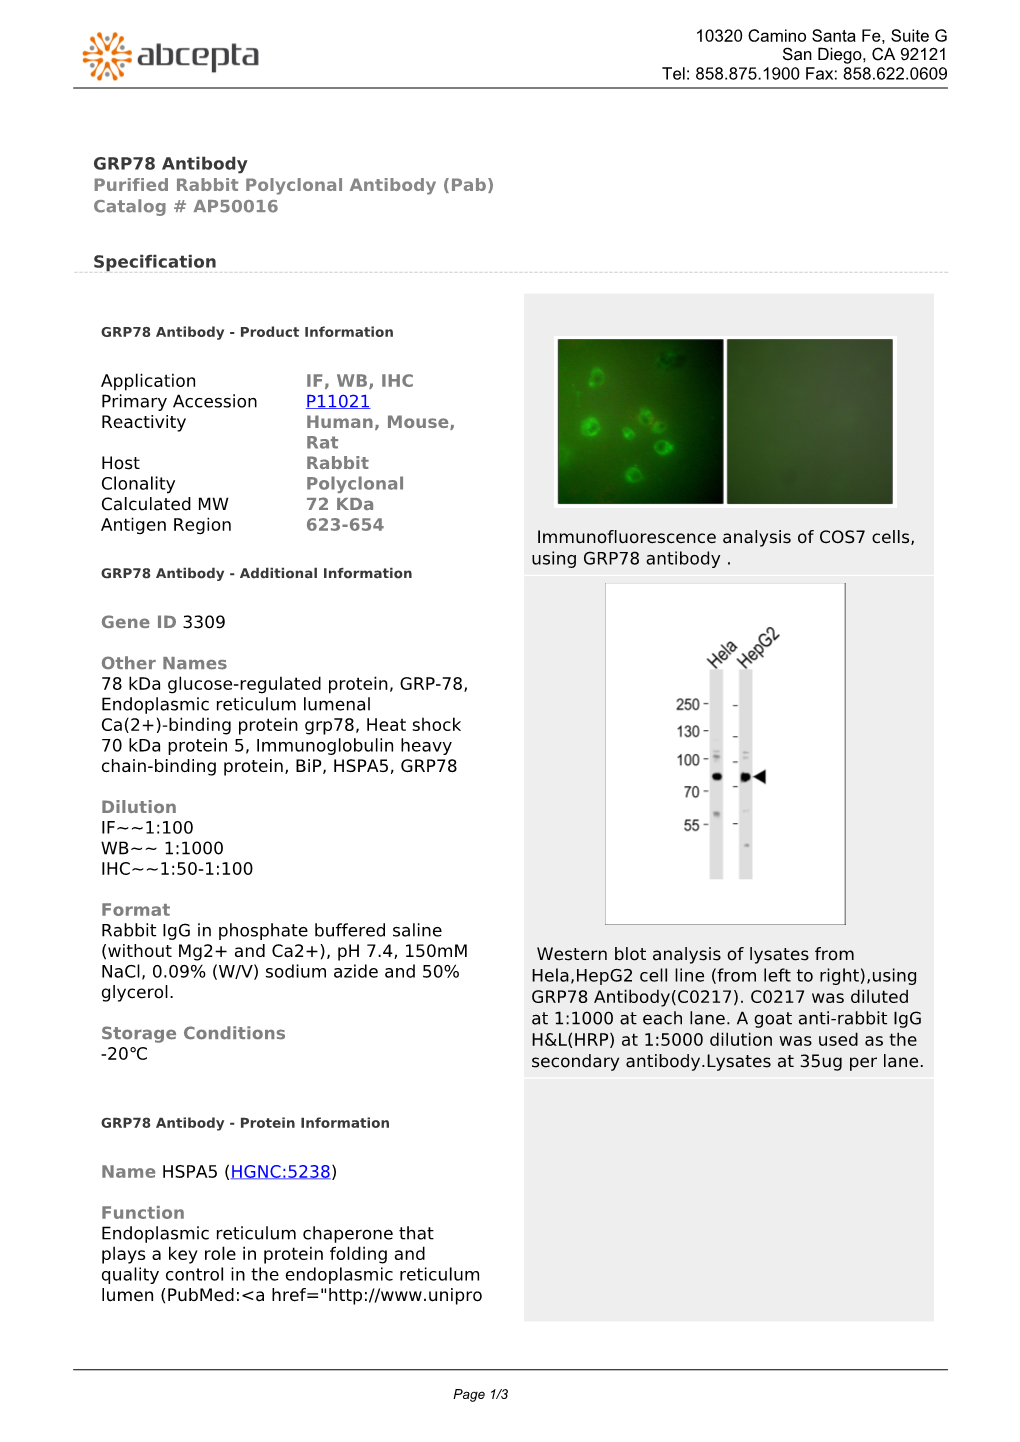 GRP78 Antibody Purified Rabbit Polyclonal Antibody (Pab) Catalog # AP50016